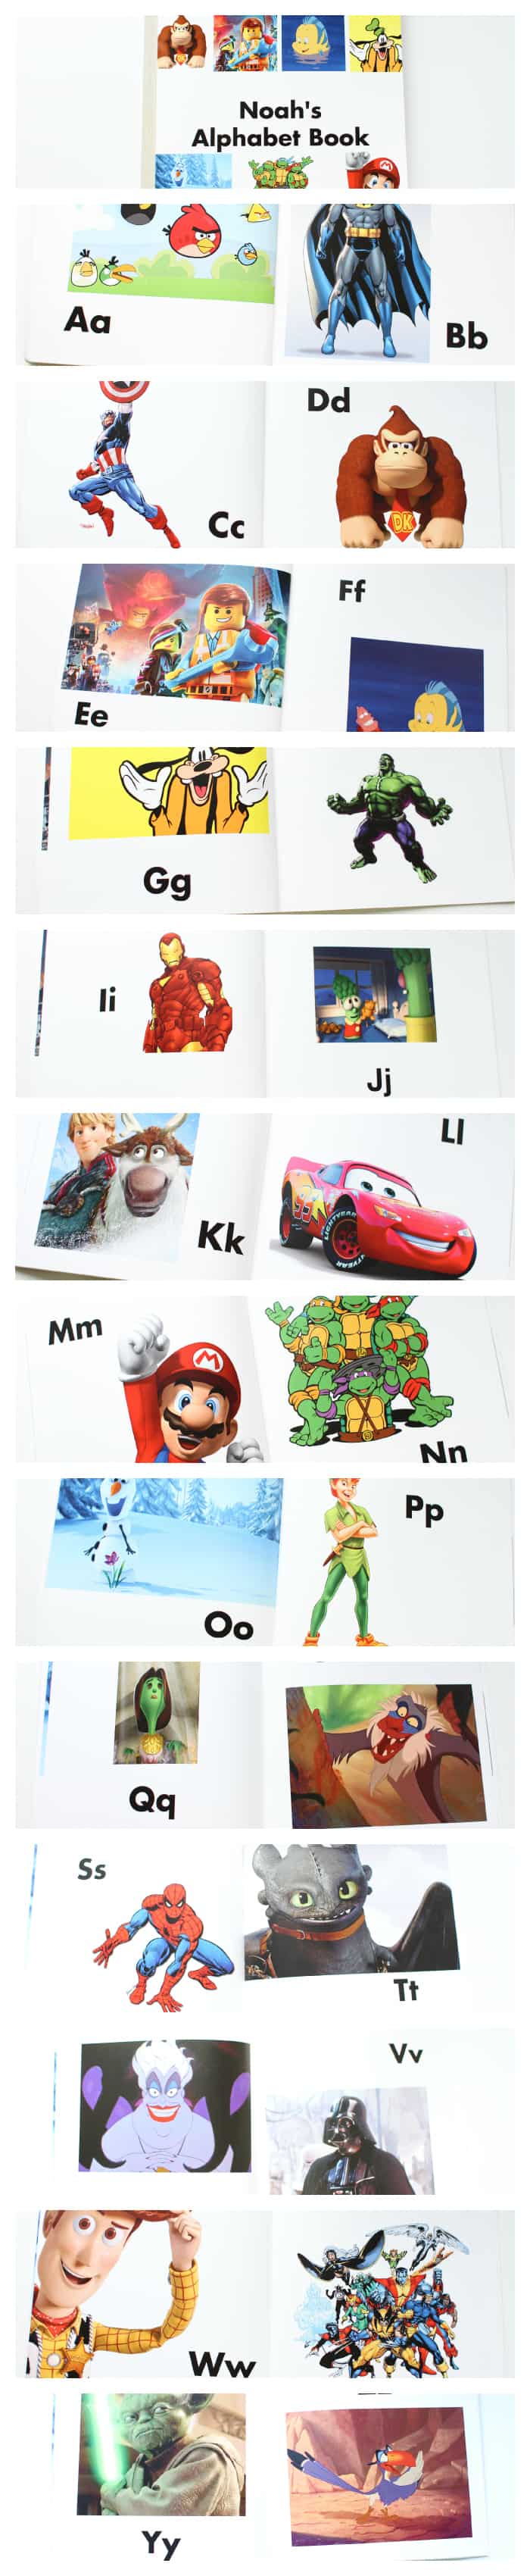 Character Alphabet Book